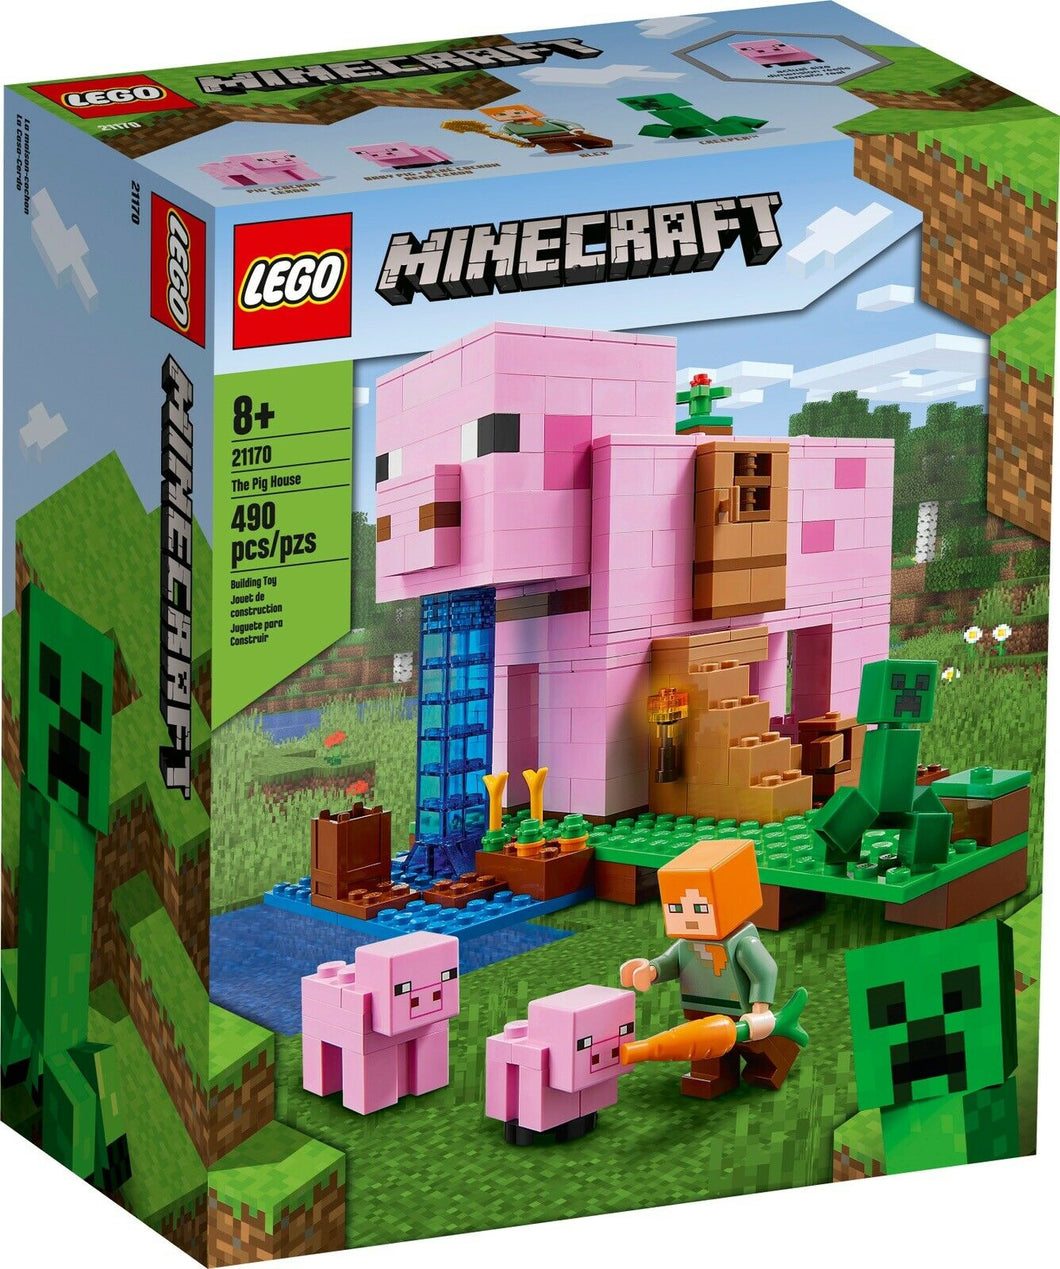 LEGO MINECRAFT La Pig House 21170